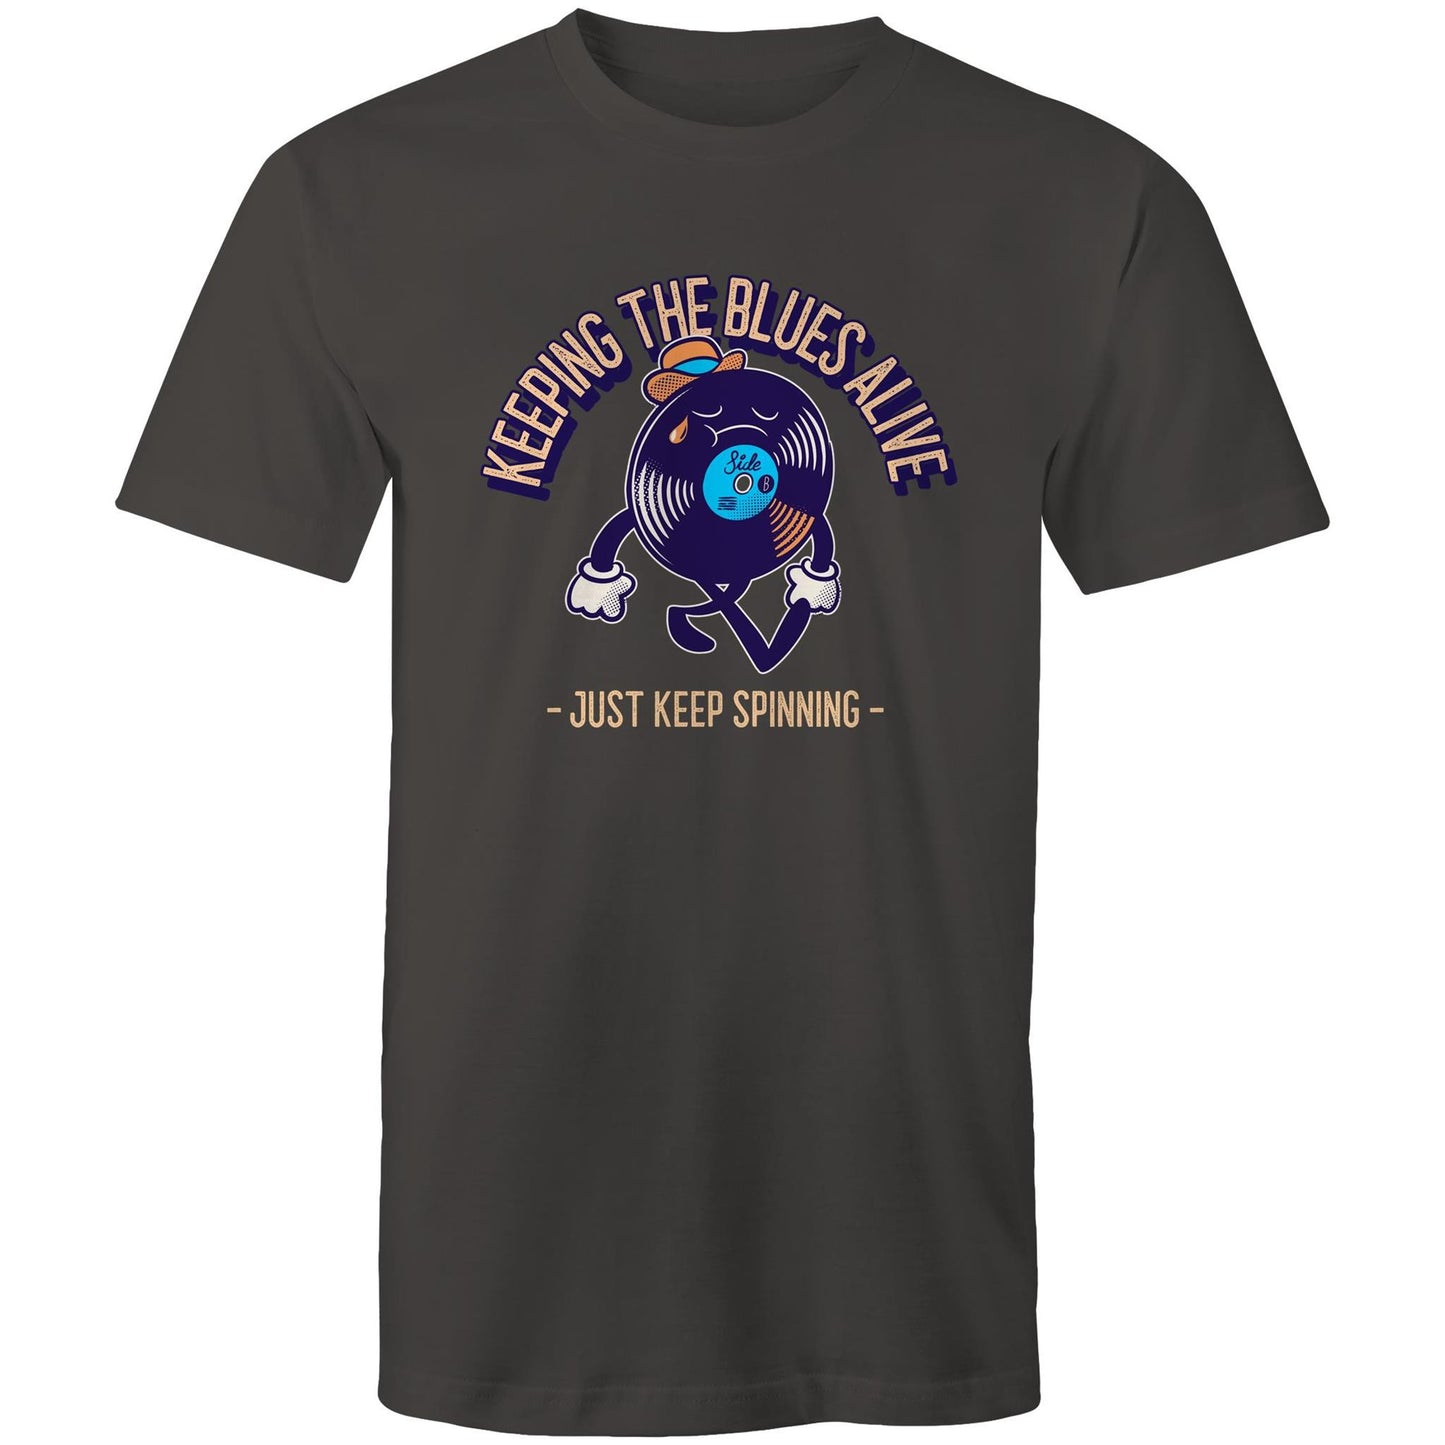 Keeping The Blues Alive - Mens T-Shirt Charcoal Mens T-shirt Music